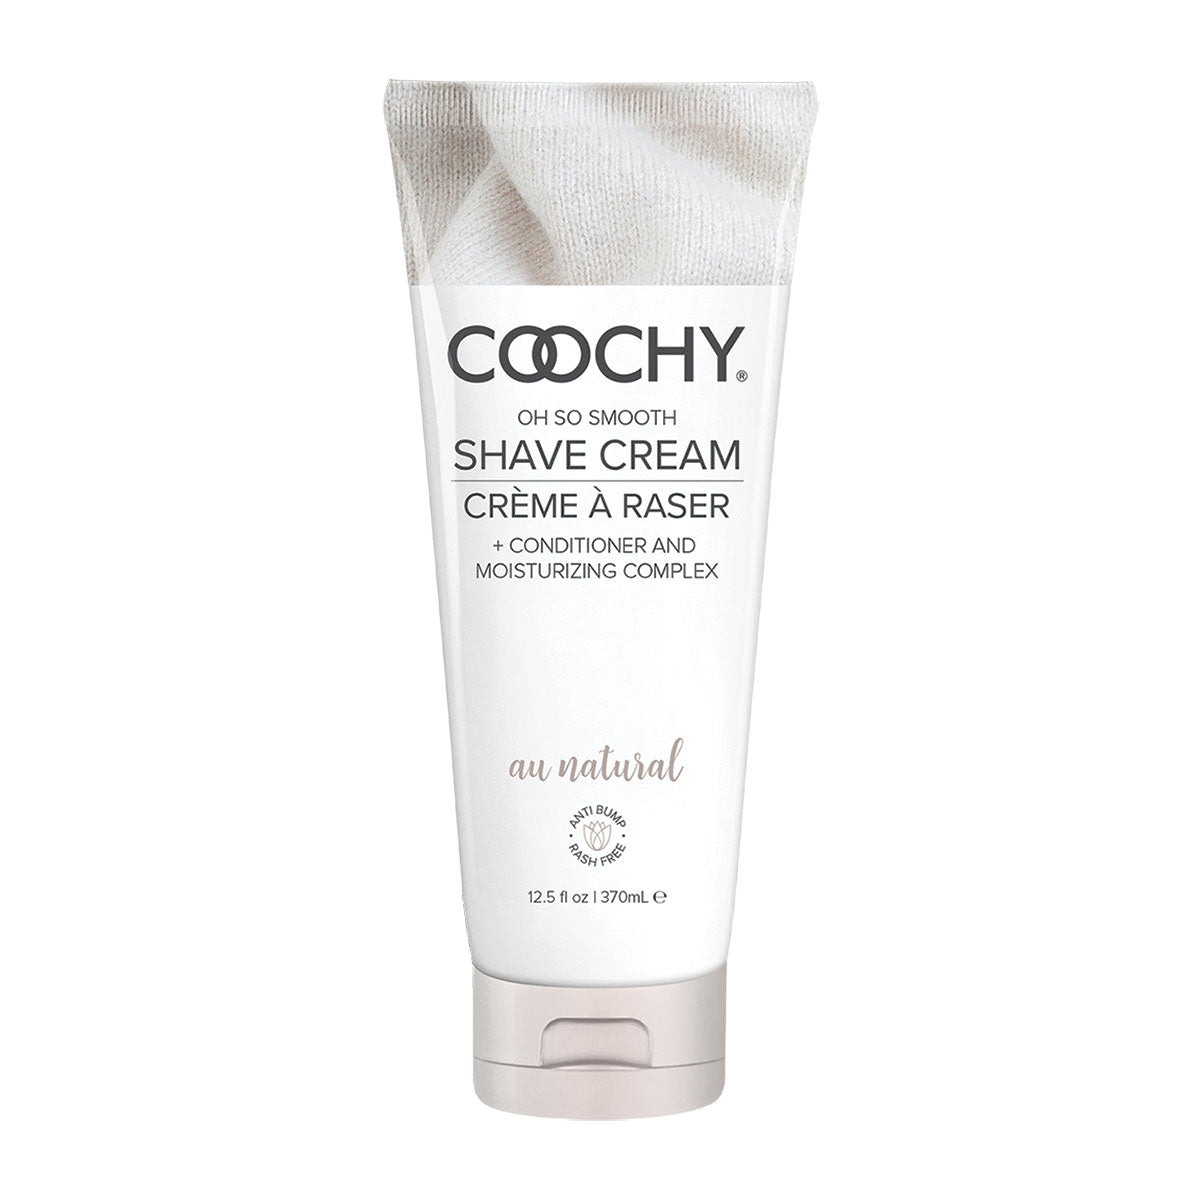 Coochy Shave Cream - 12.5oz Au Natural